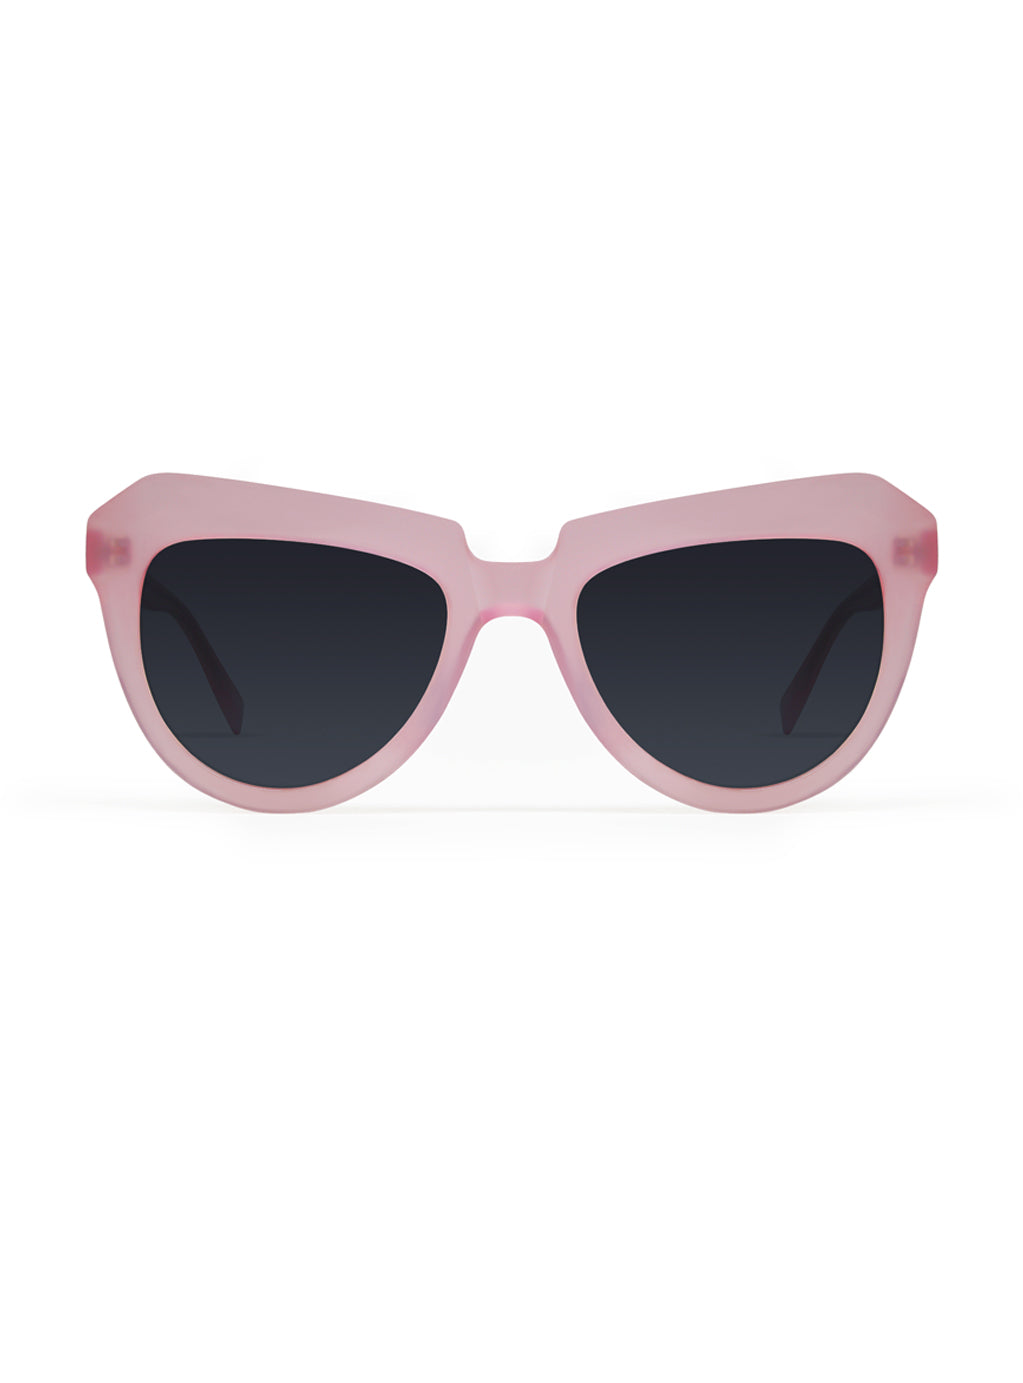 Iota Pink with Black Lenses